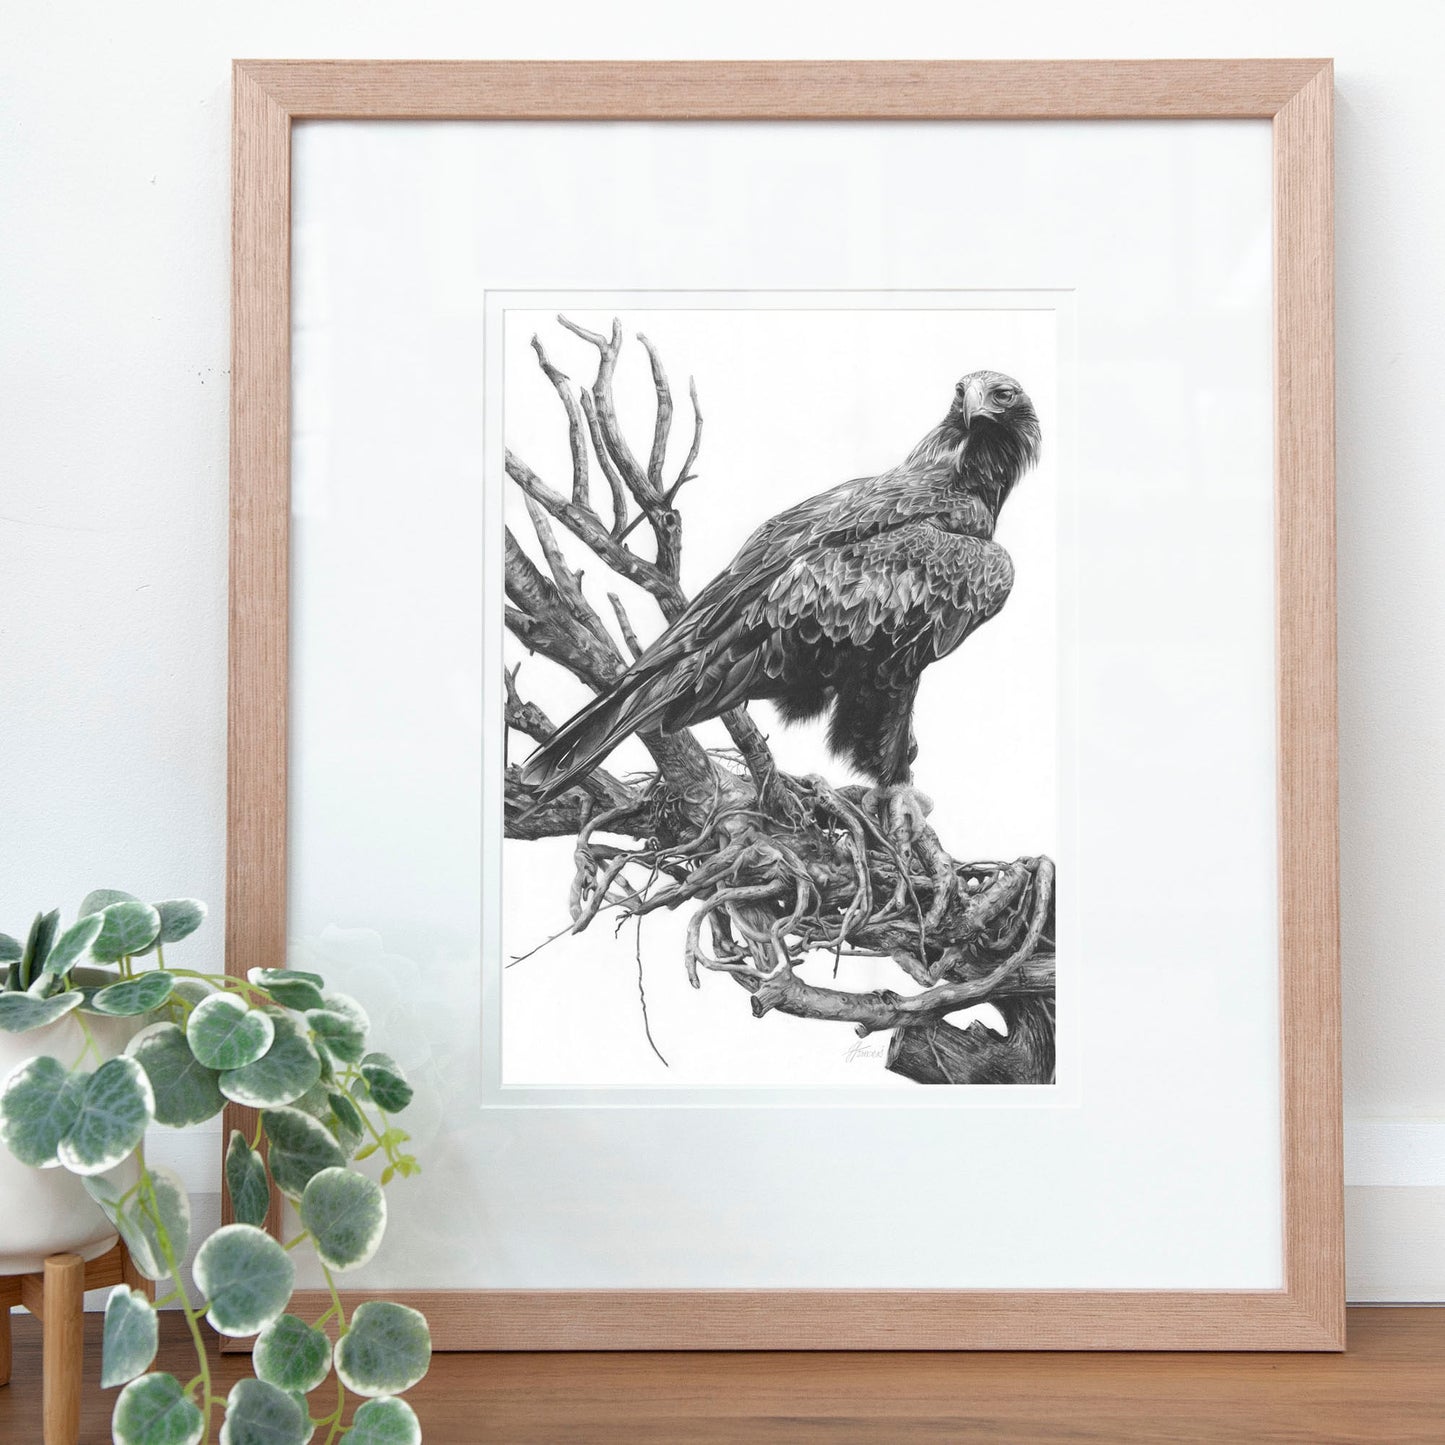 'Wedge-tailed Eagle' art print